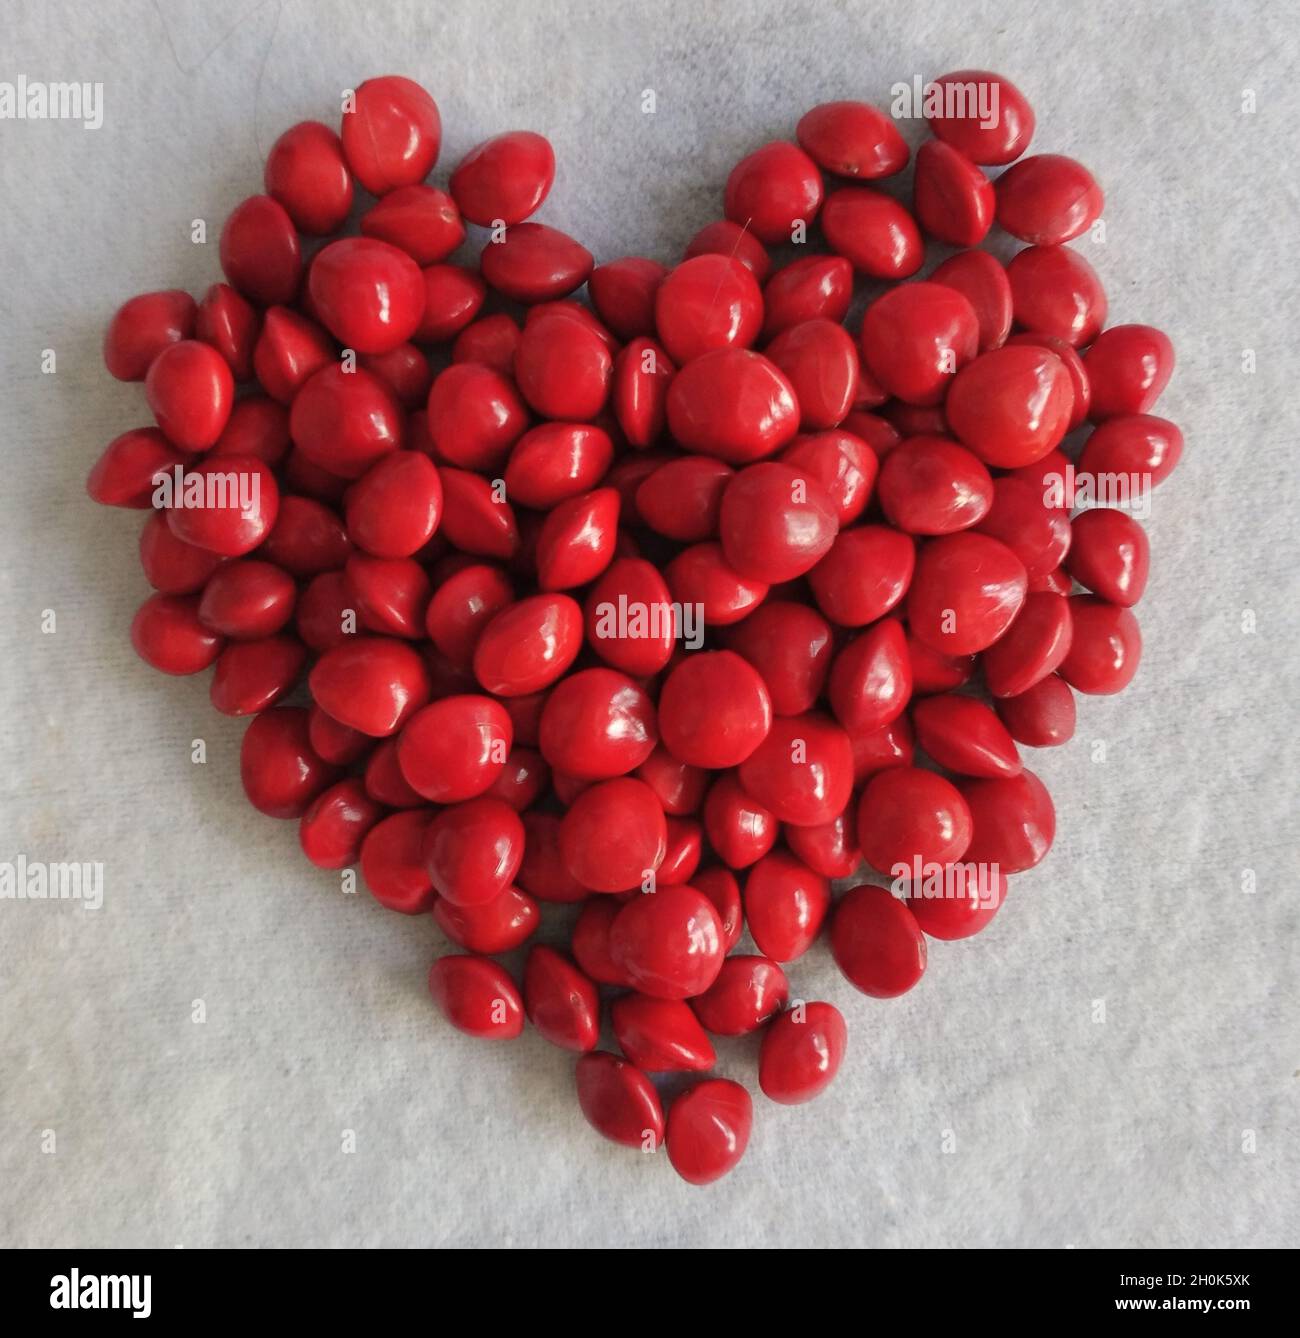 red heart shape saga seeds background border Stock Photo